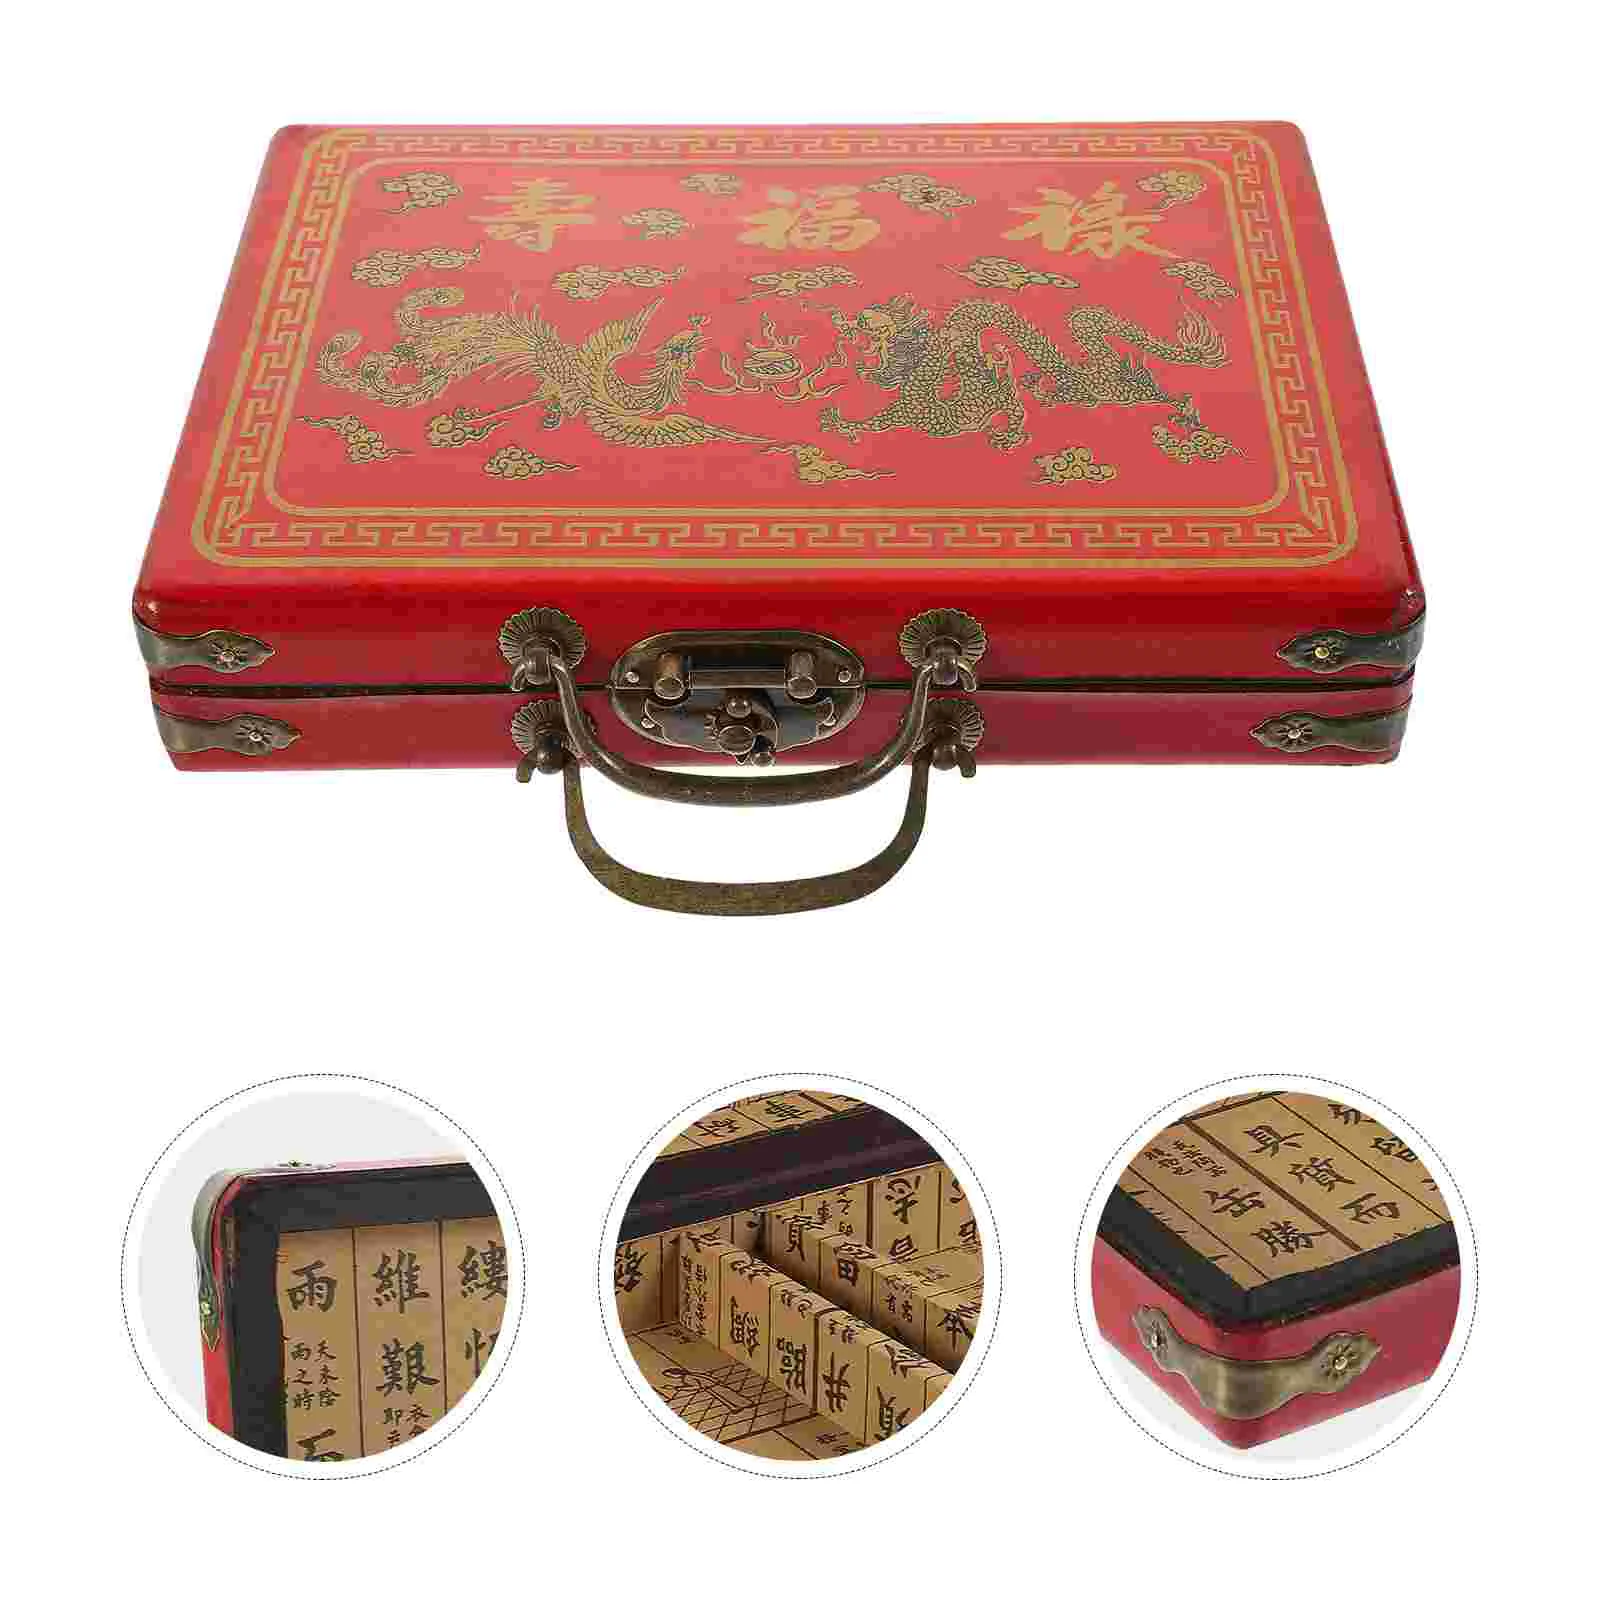 

Mahjong Storage Box Retro Case Household Organizer Handle Design Carrier Vintage Style Travel Jewlerly